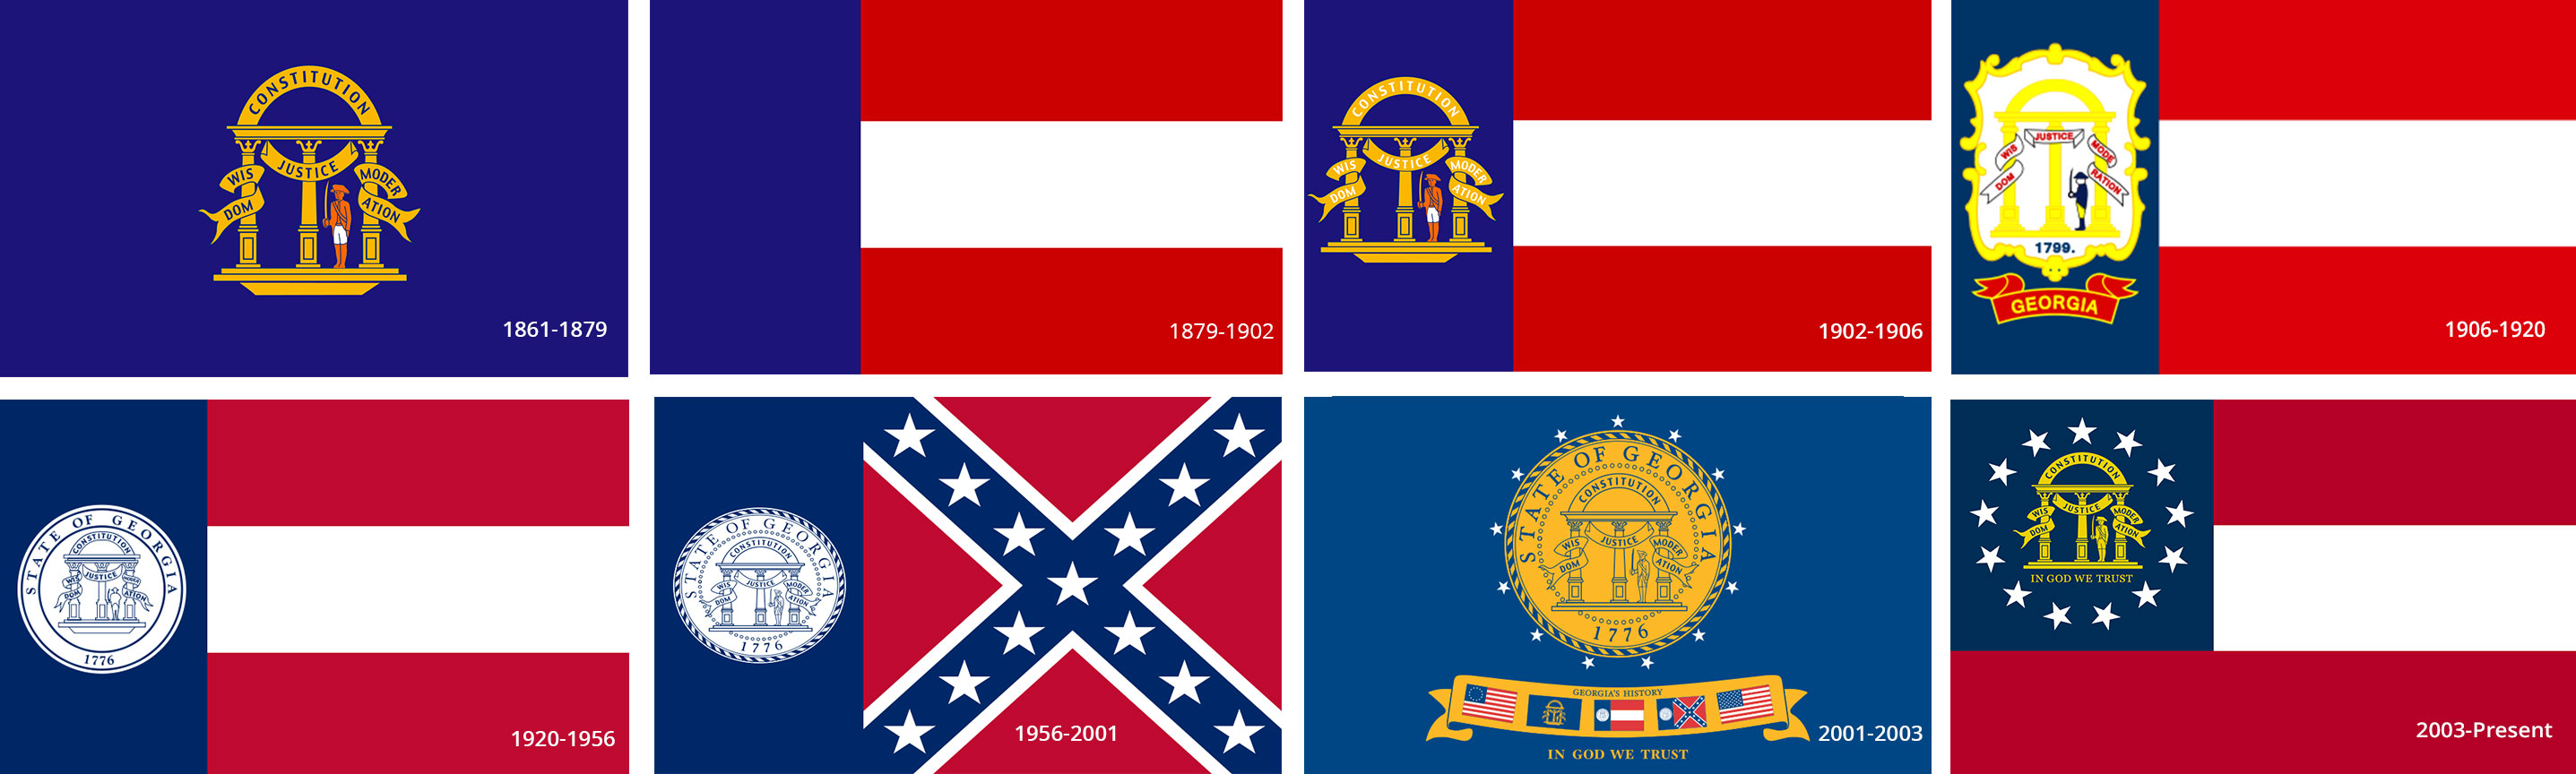 Georgia State Flags History